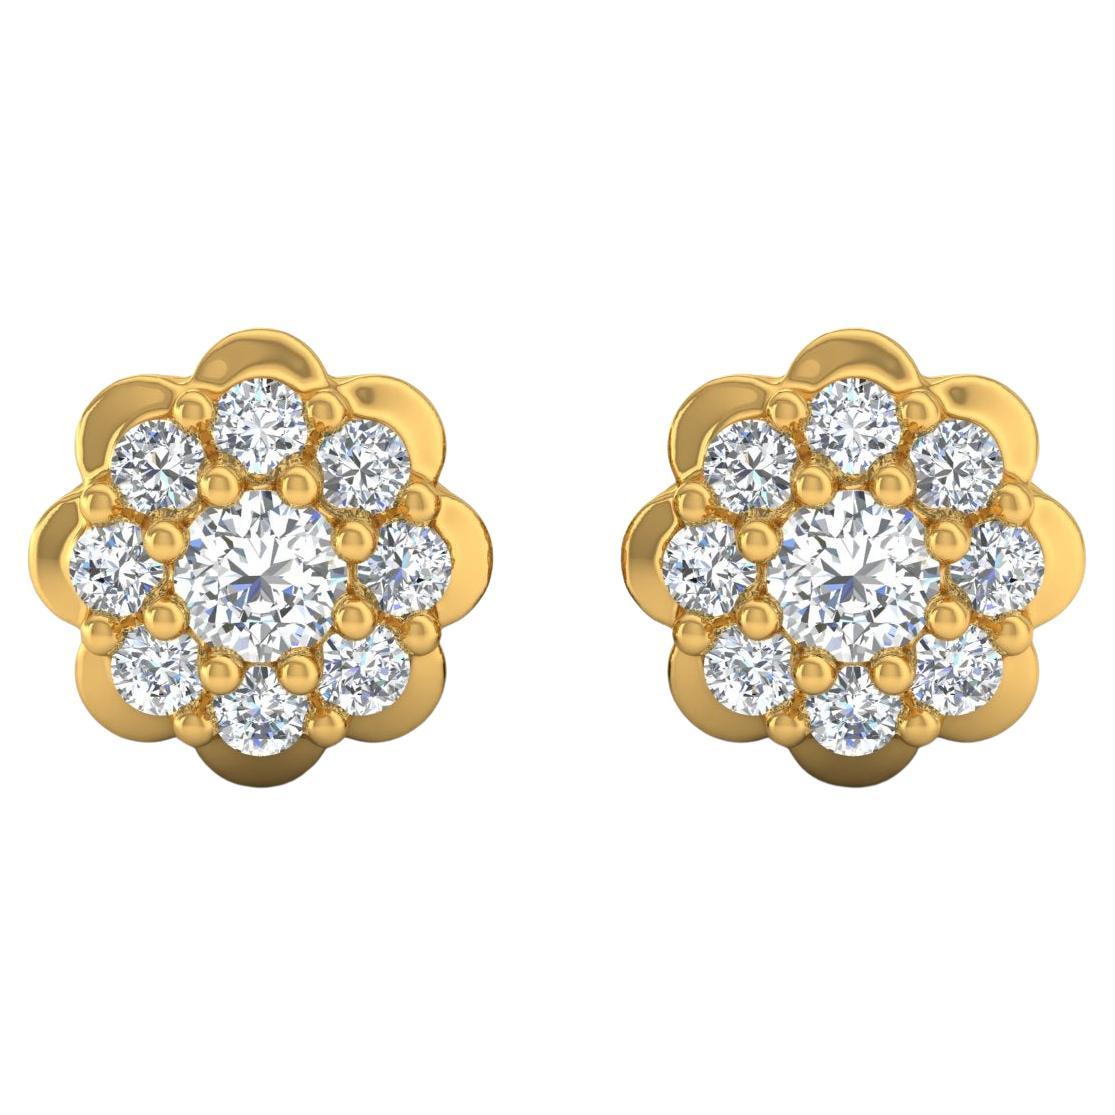 1.15 Carat SI Clarity HI Color Diamond Stud Earrings 18 Karat White Gold Jewelry